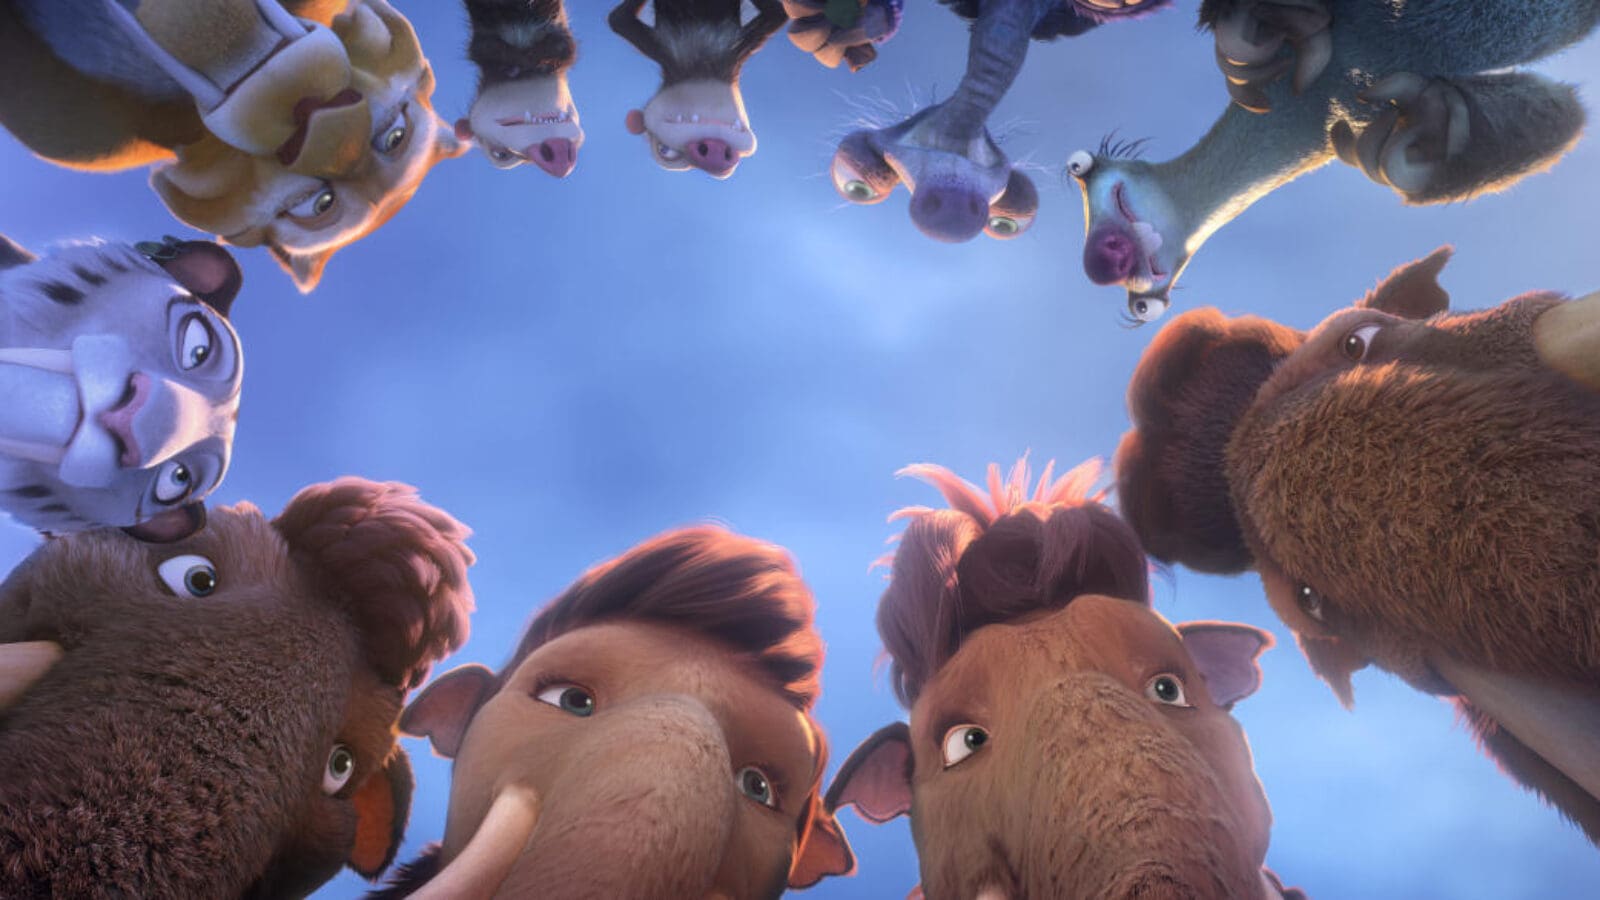 OXMOX Film-Tipp: Ice Age – Kollision voraus! [3D]